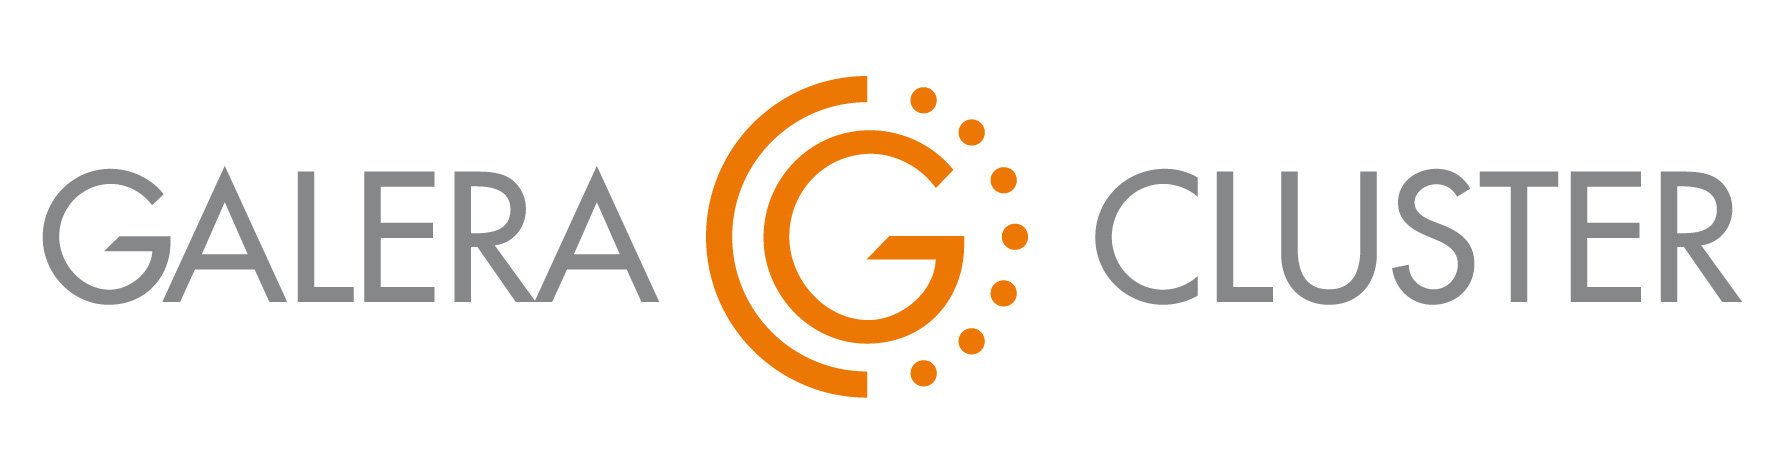 Galera_Cluster_Logo